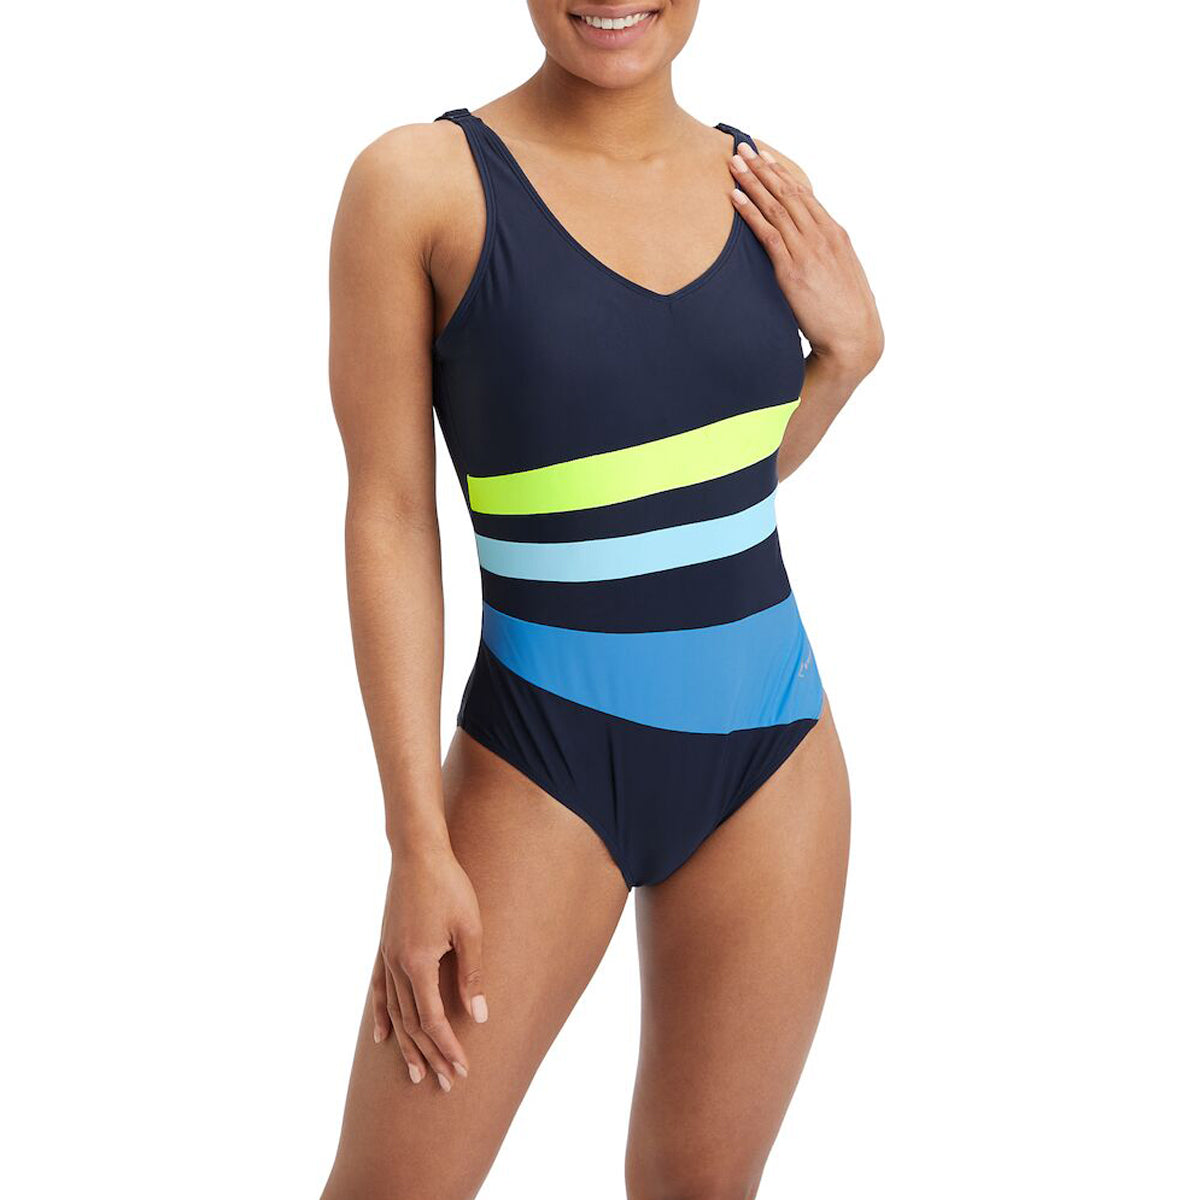 Energetics F&S Felice Swimsuit For Women, Navy